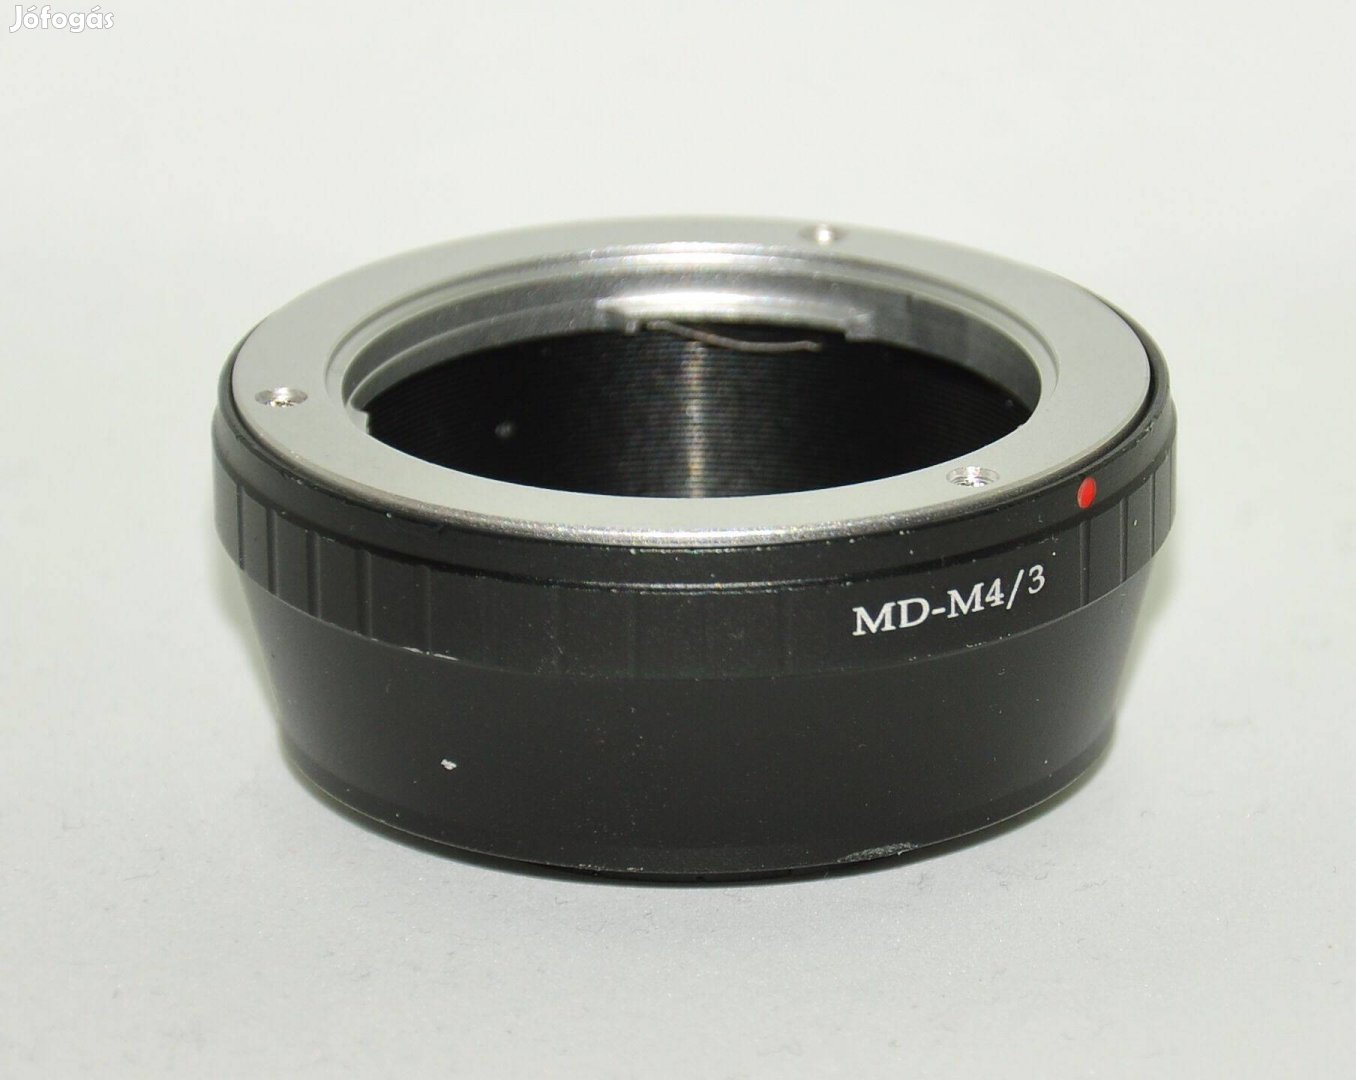 Minolta MD Mikró 4/3 adapter